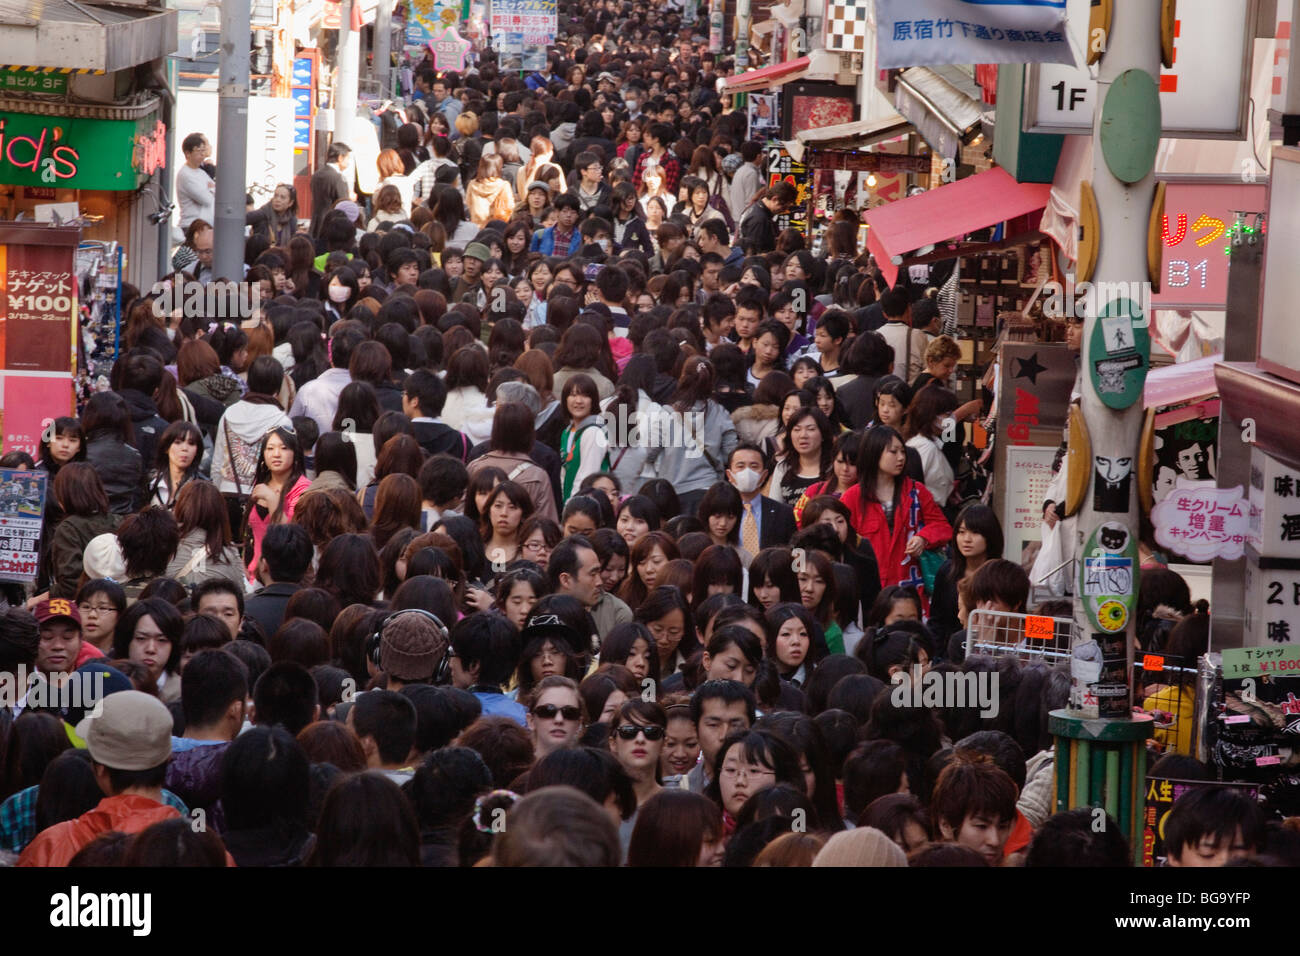 crowd-of-people-on-takeshita-street-harajuku-tokyo-japan-BG9YFP.jpg